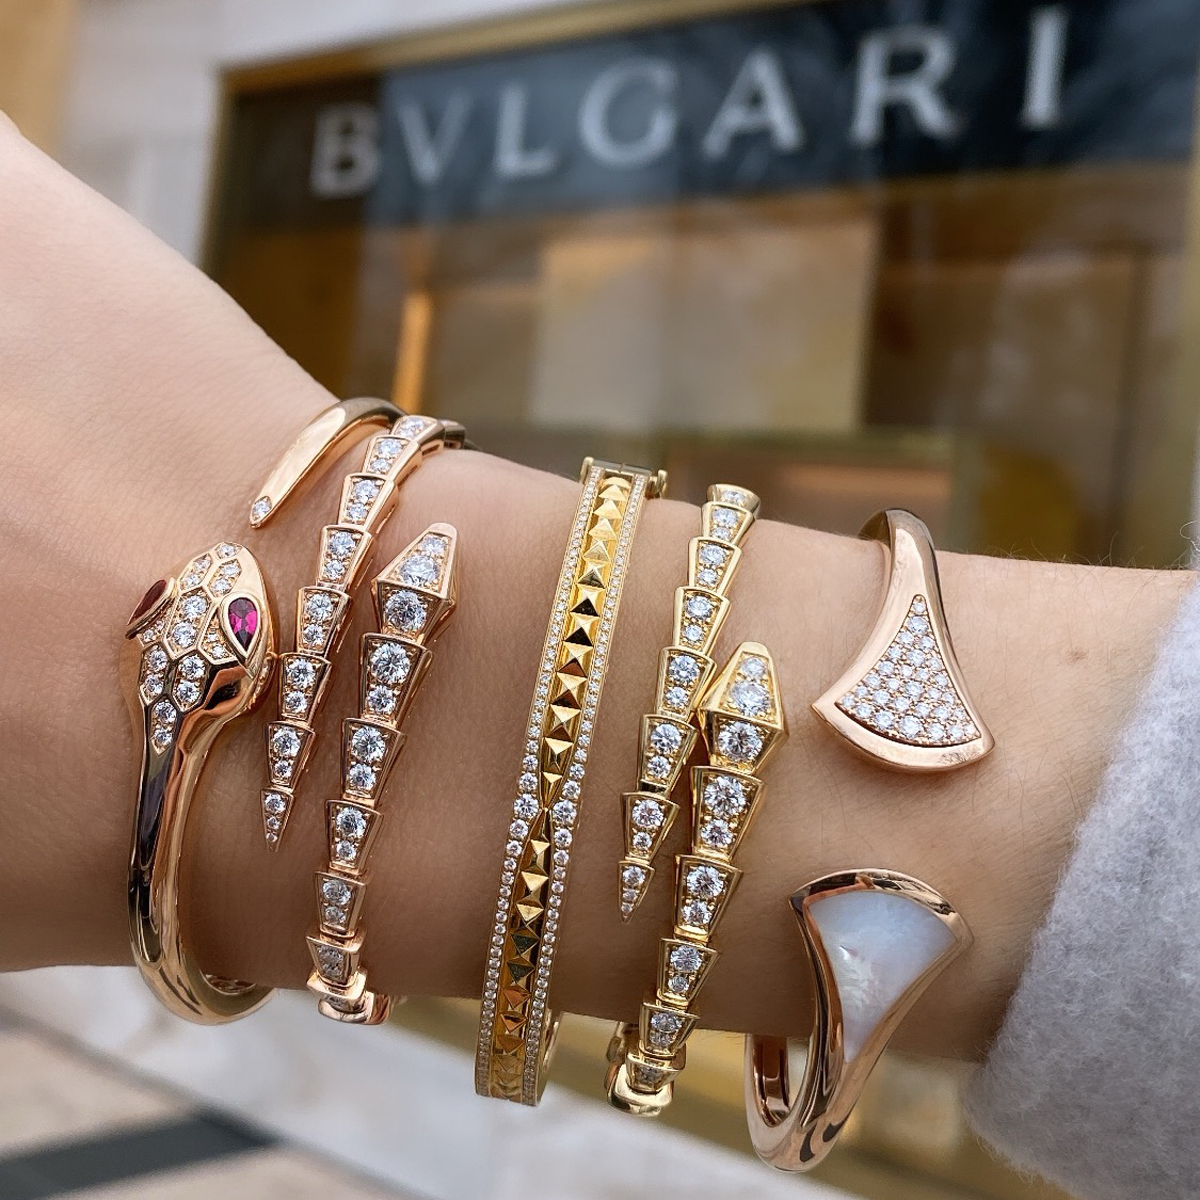 Bulgari Serpenti Viper 75 anniversary rose gold and white gold bracelets |  Bulgari | The Jewellery Editor